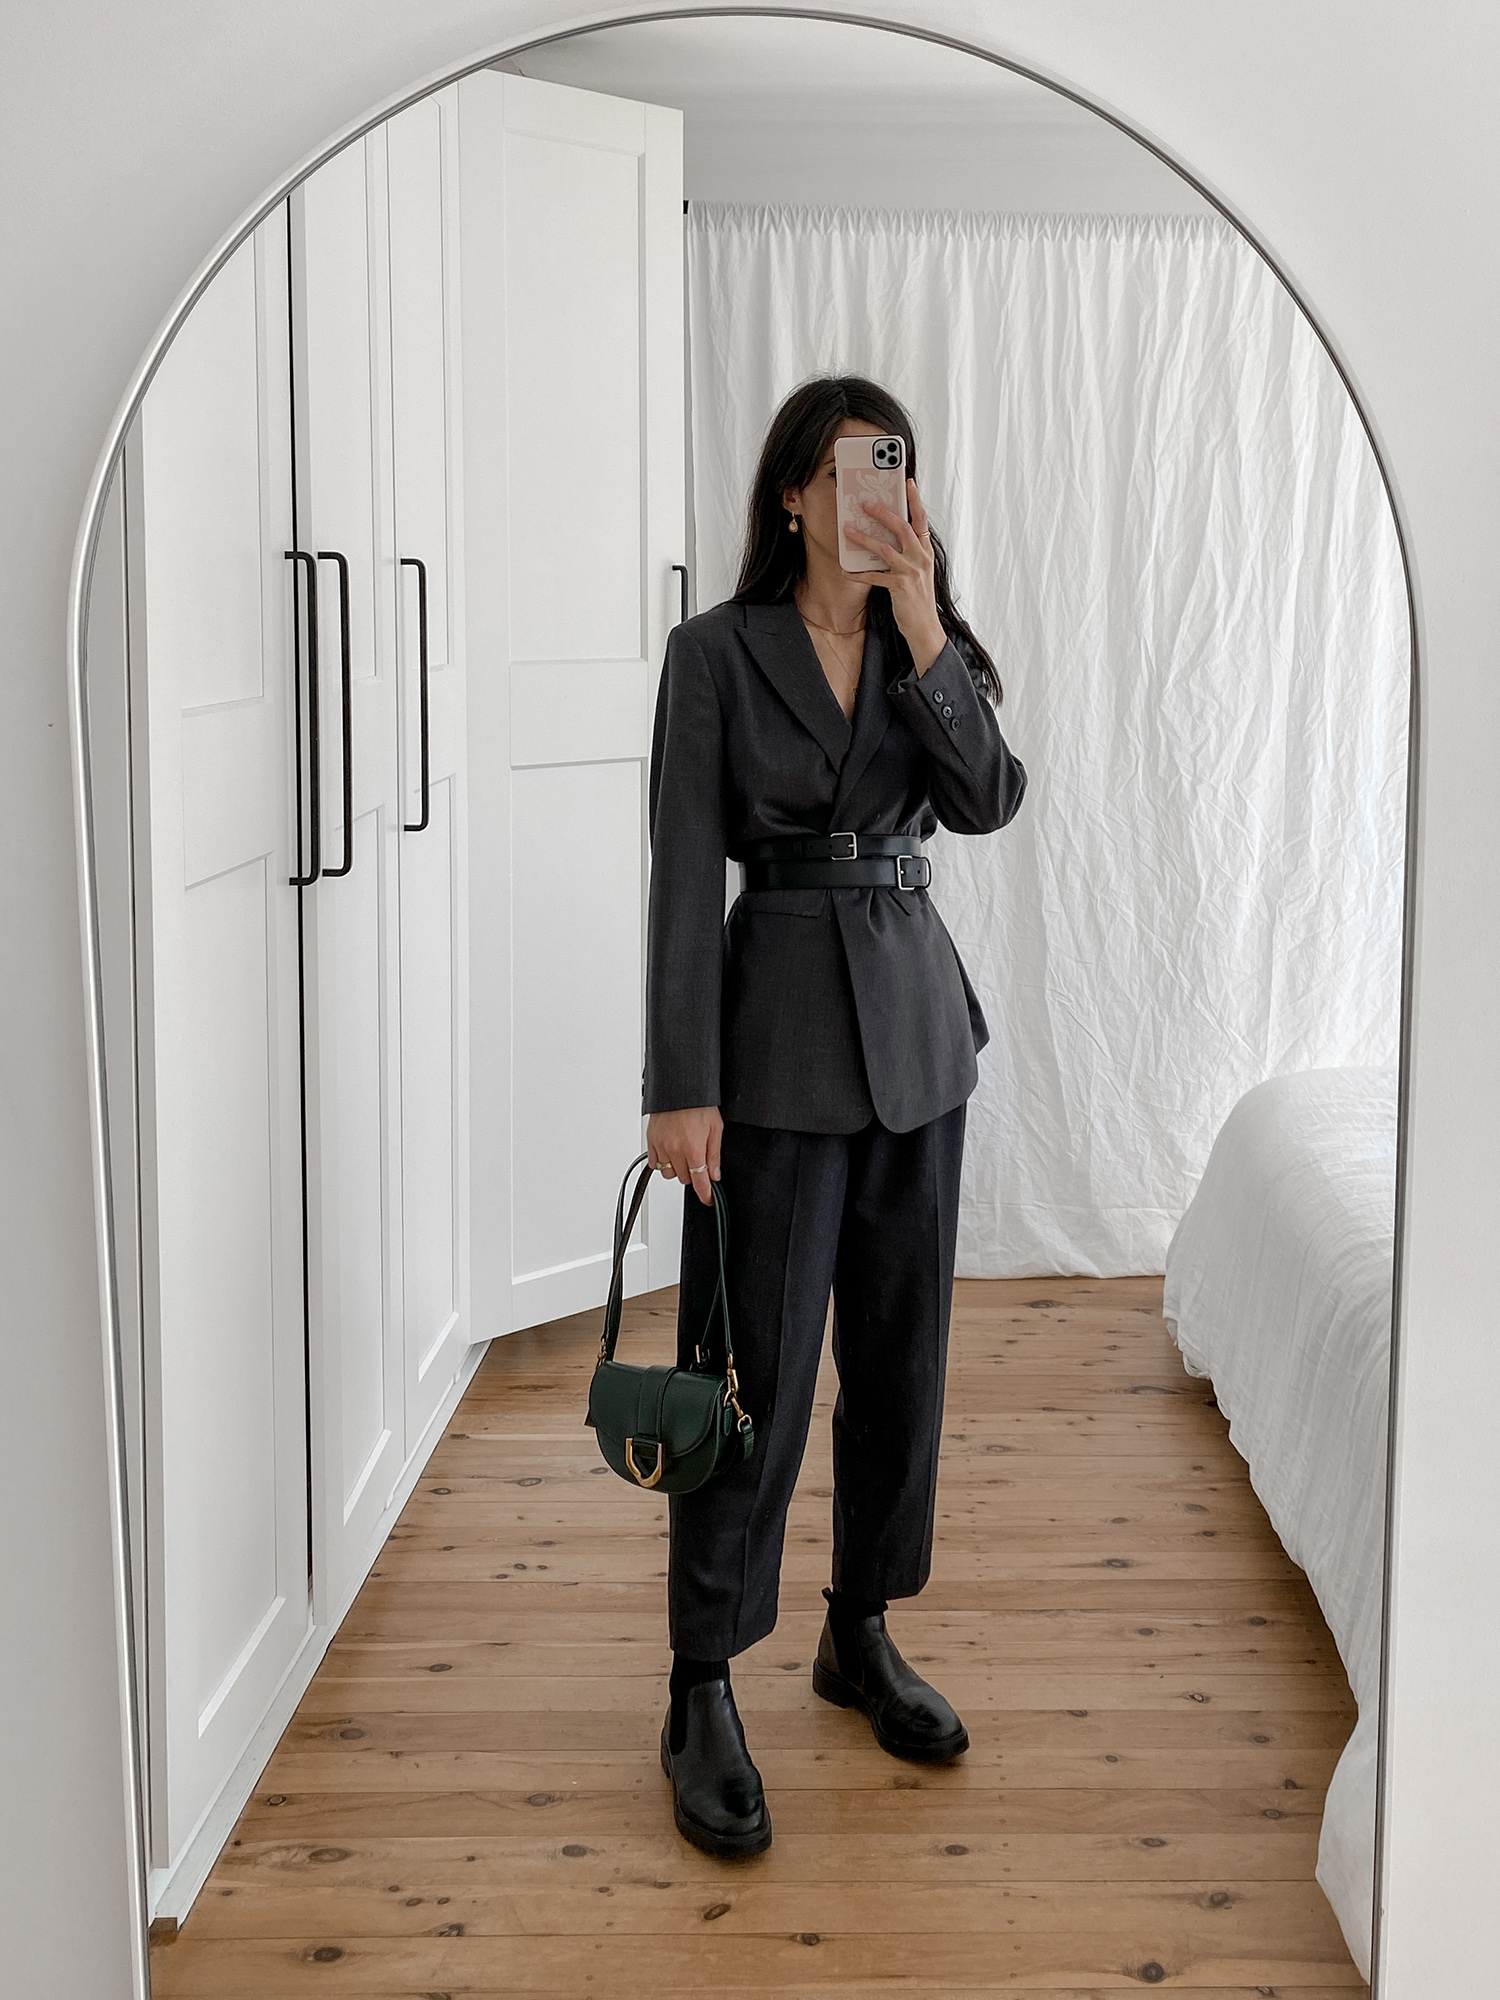 H&M straight leg trousers minimalist Parisian chic style